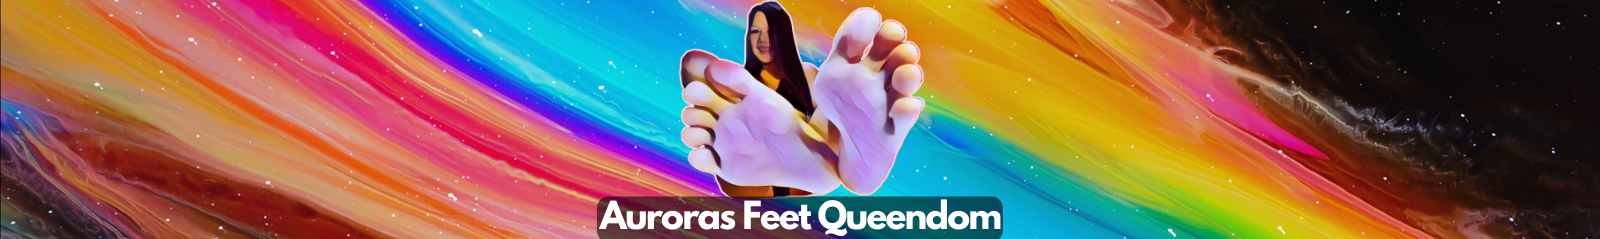 Aurora's feet